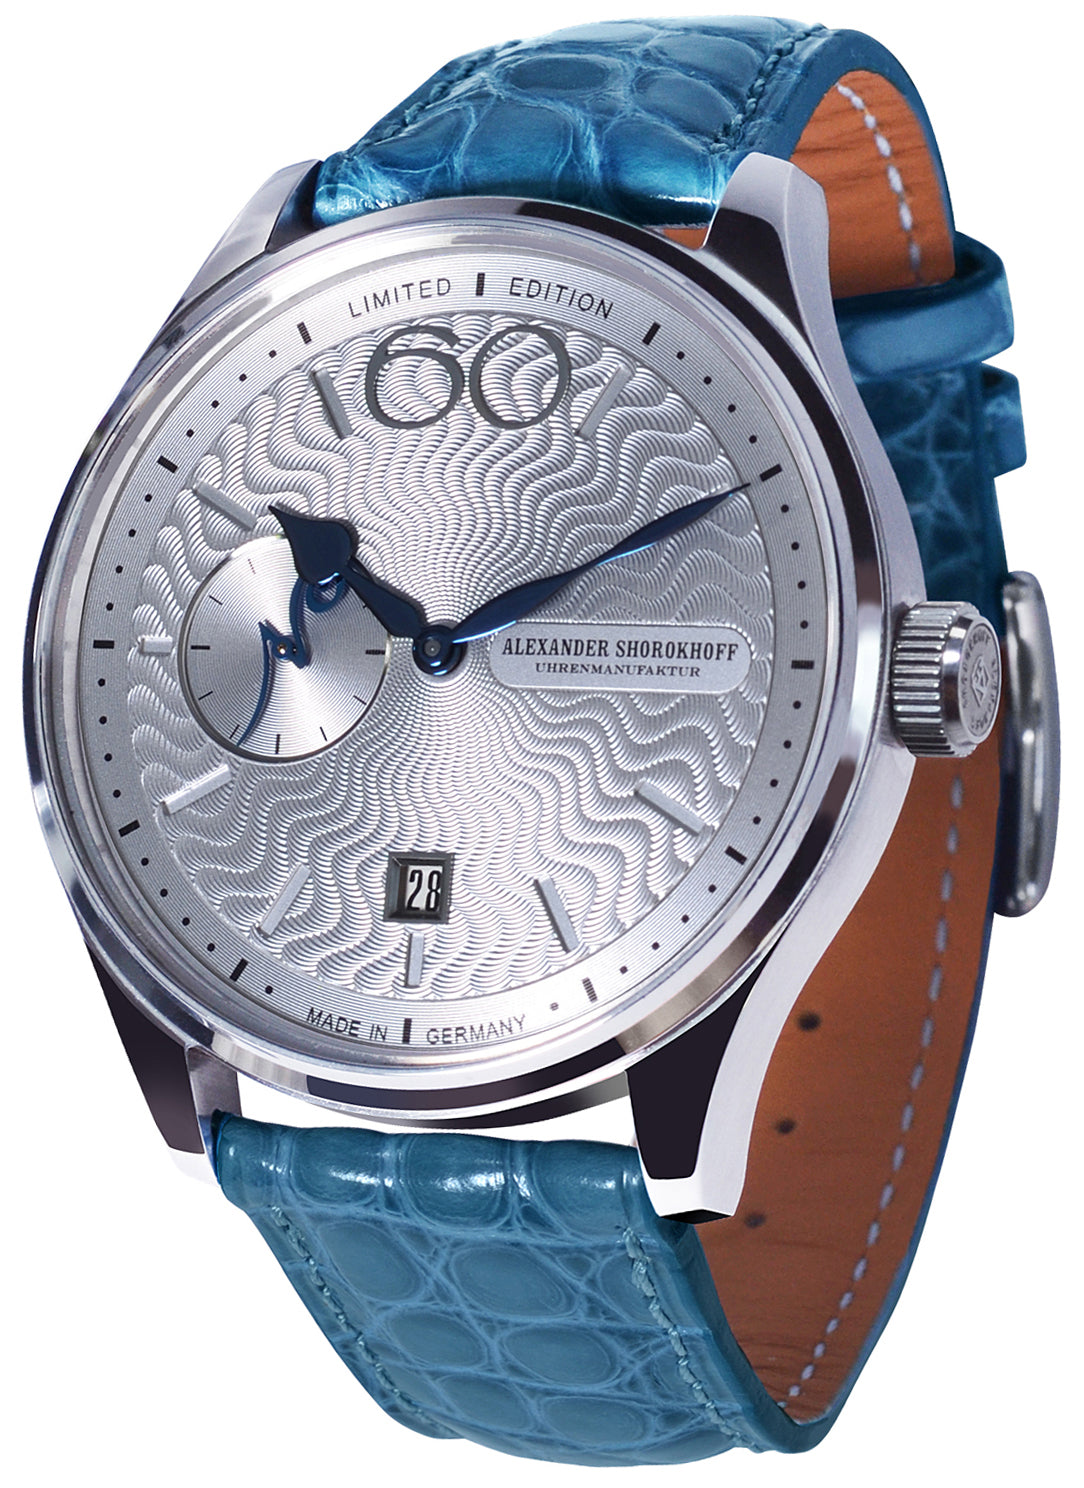 Alexander Shorokhoff Watch Neva Limited Edition